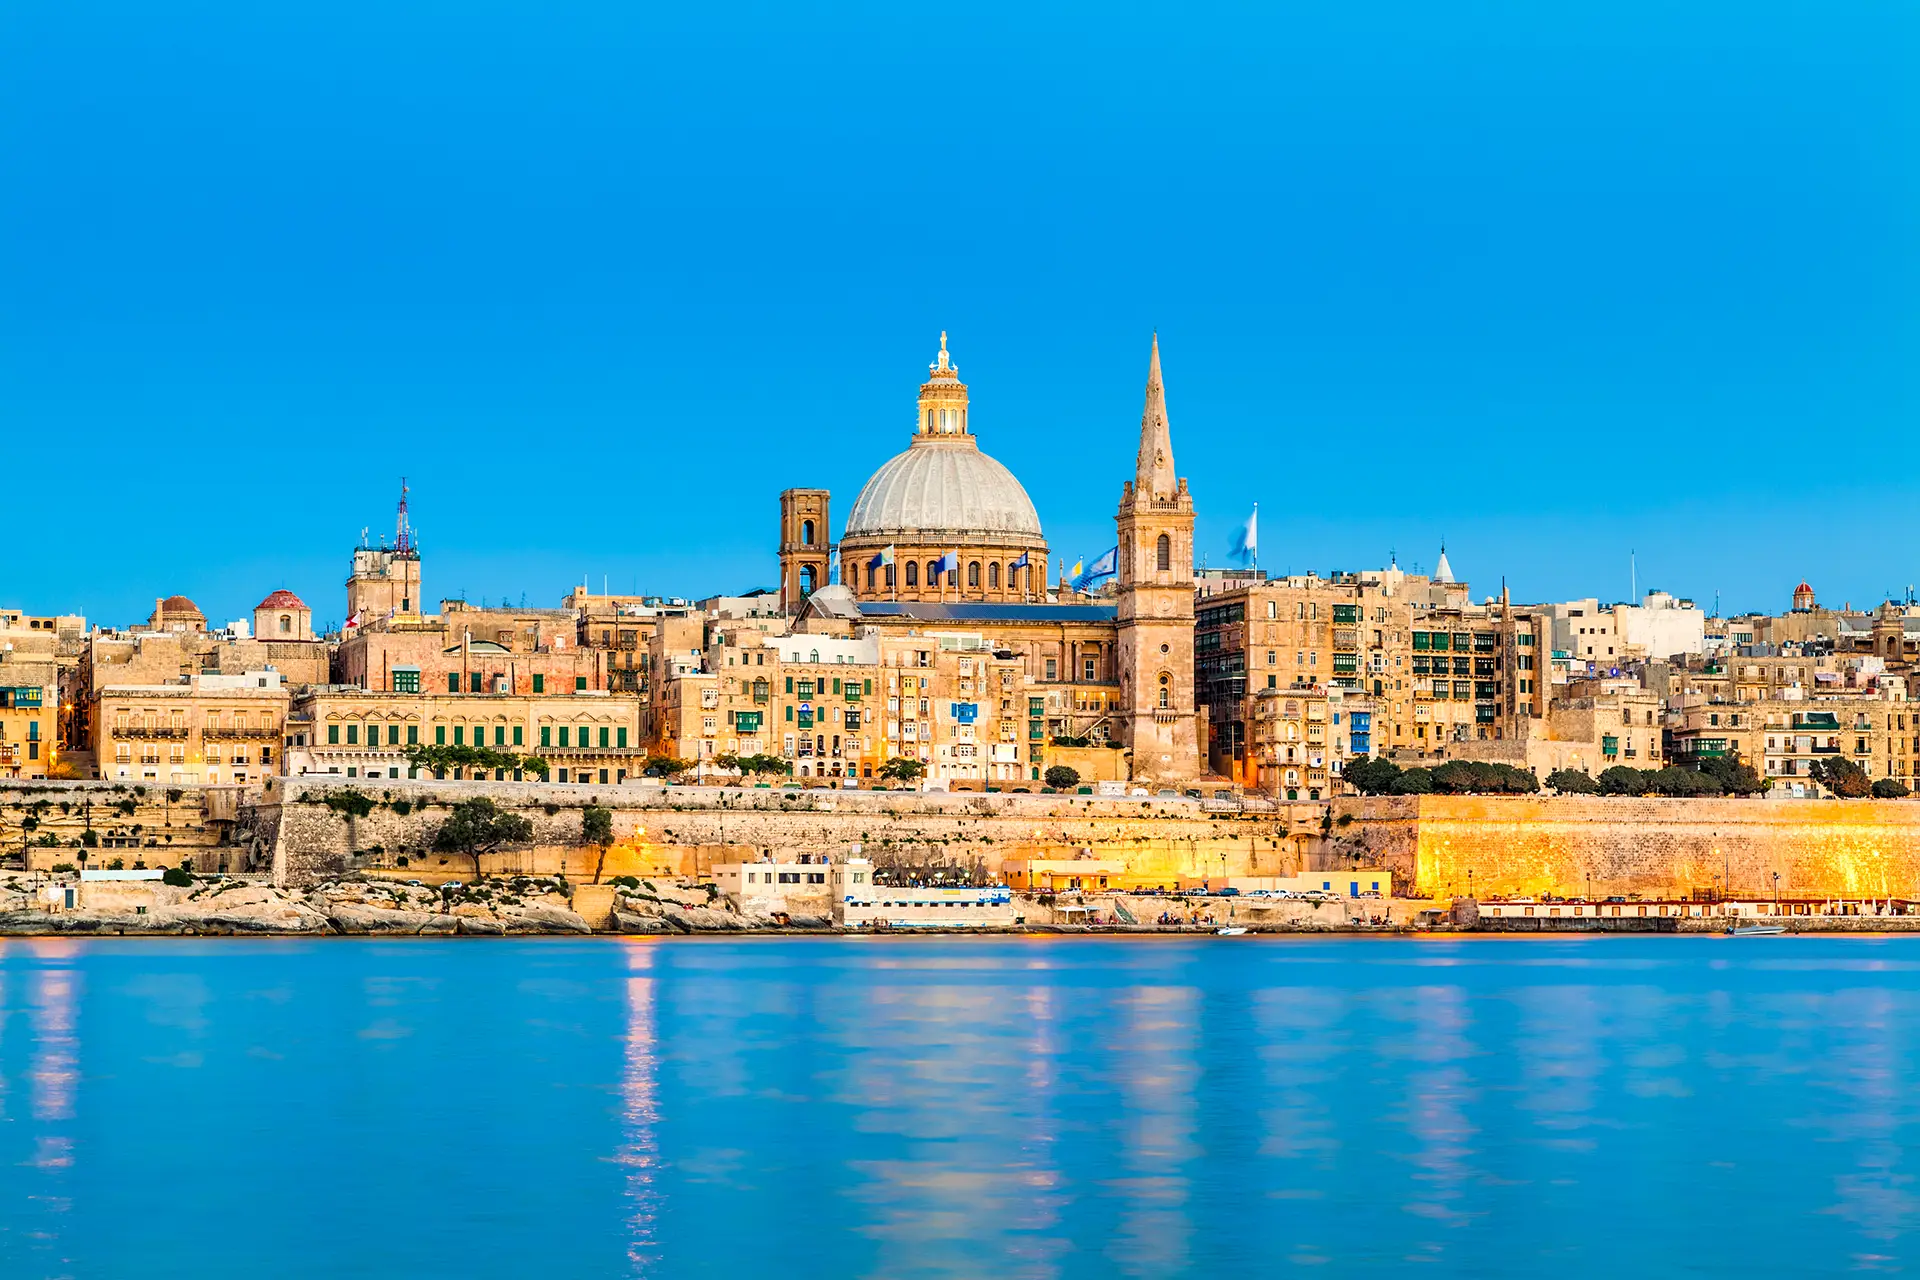 malta-passport-visa-free-countries-list